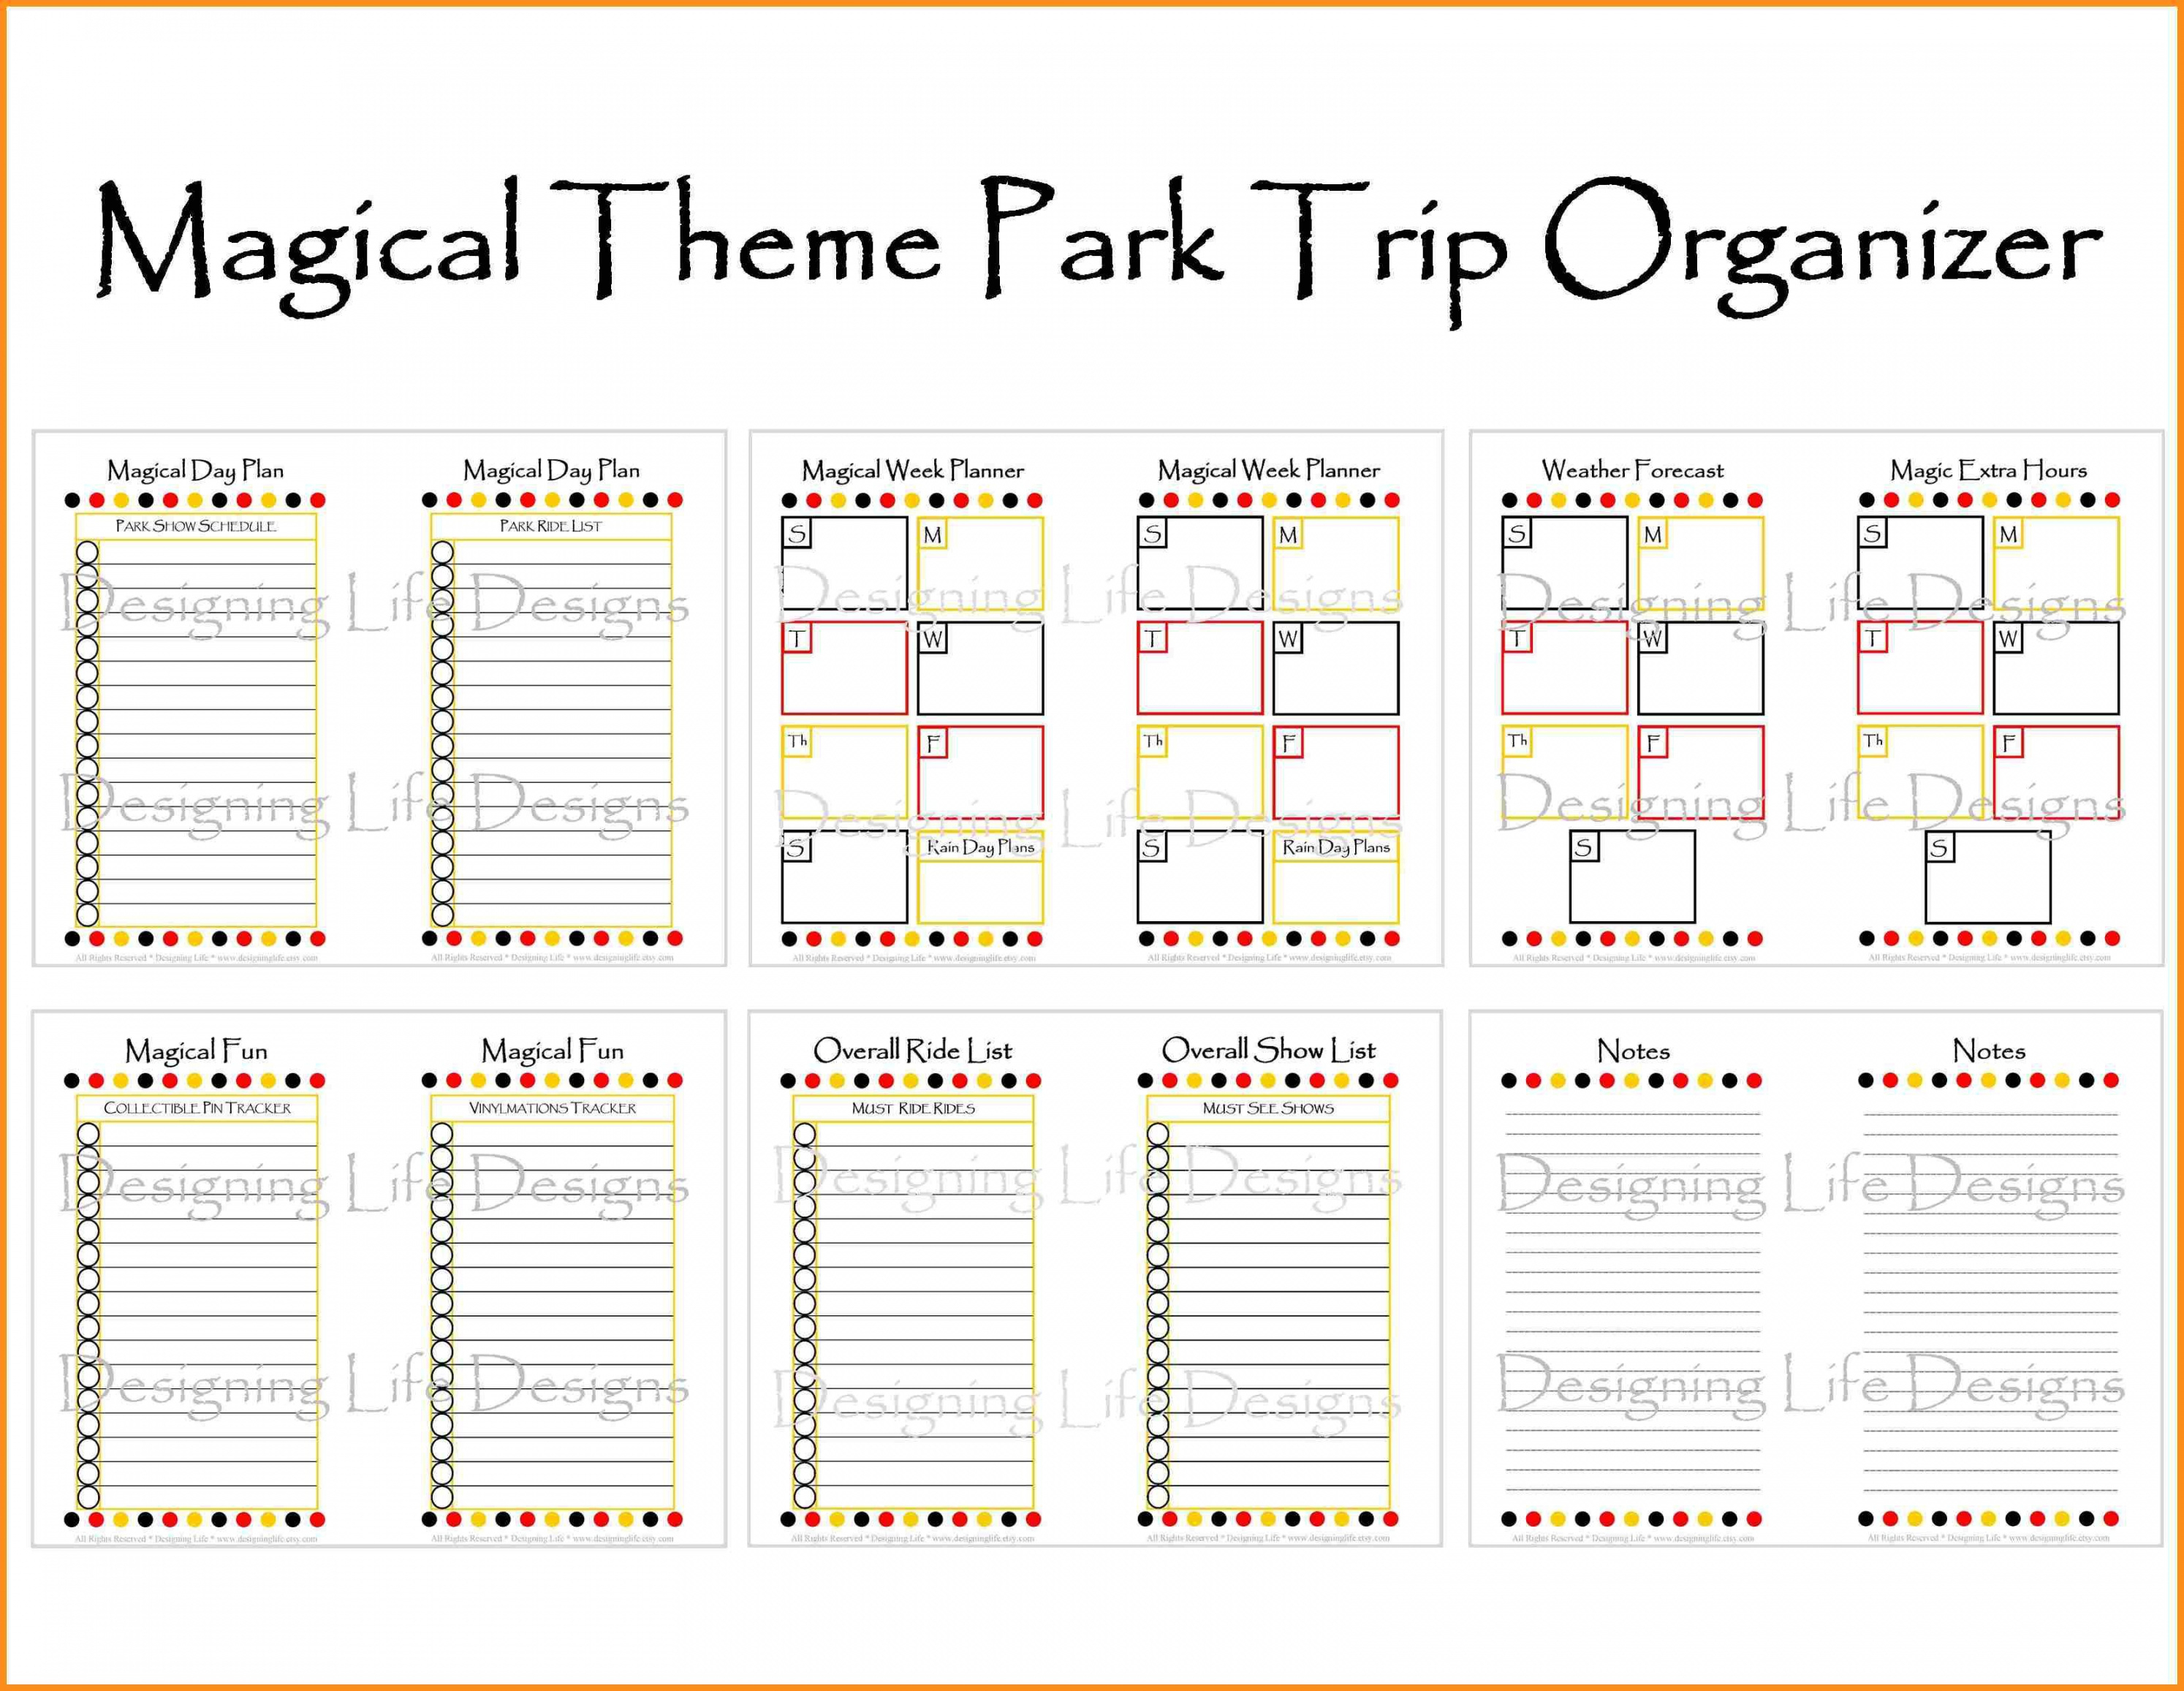 Disney World Vacation Planner Templates Example Calendar Printable